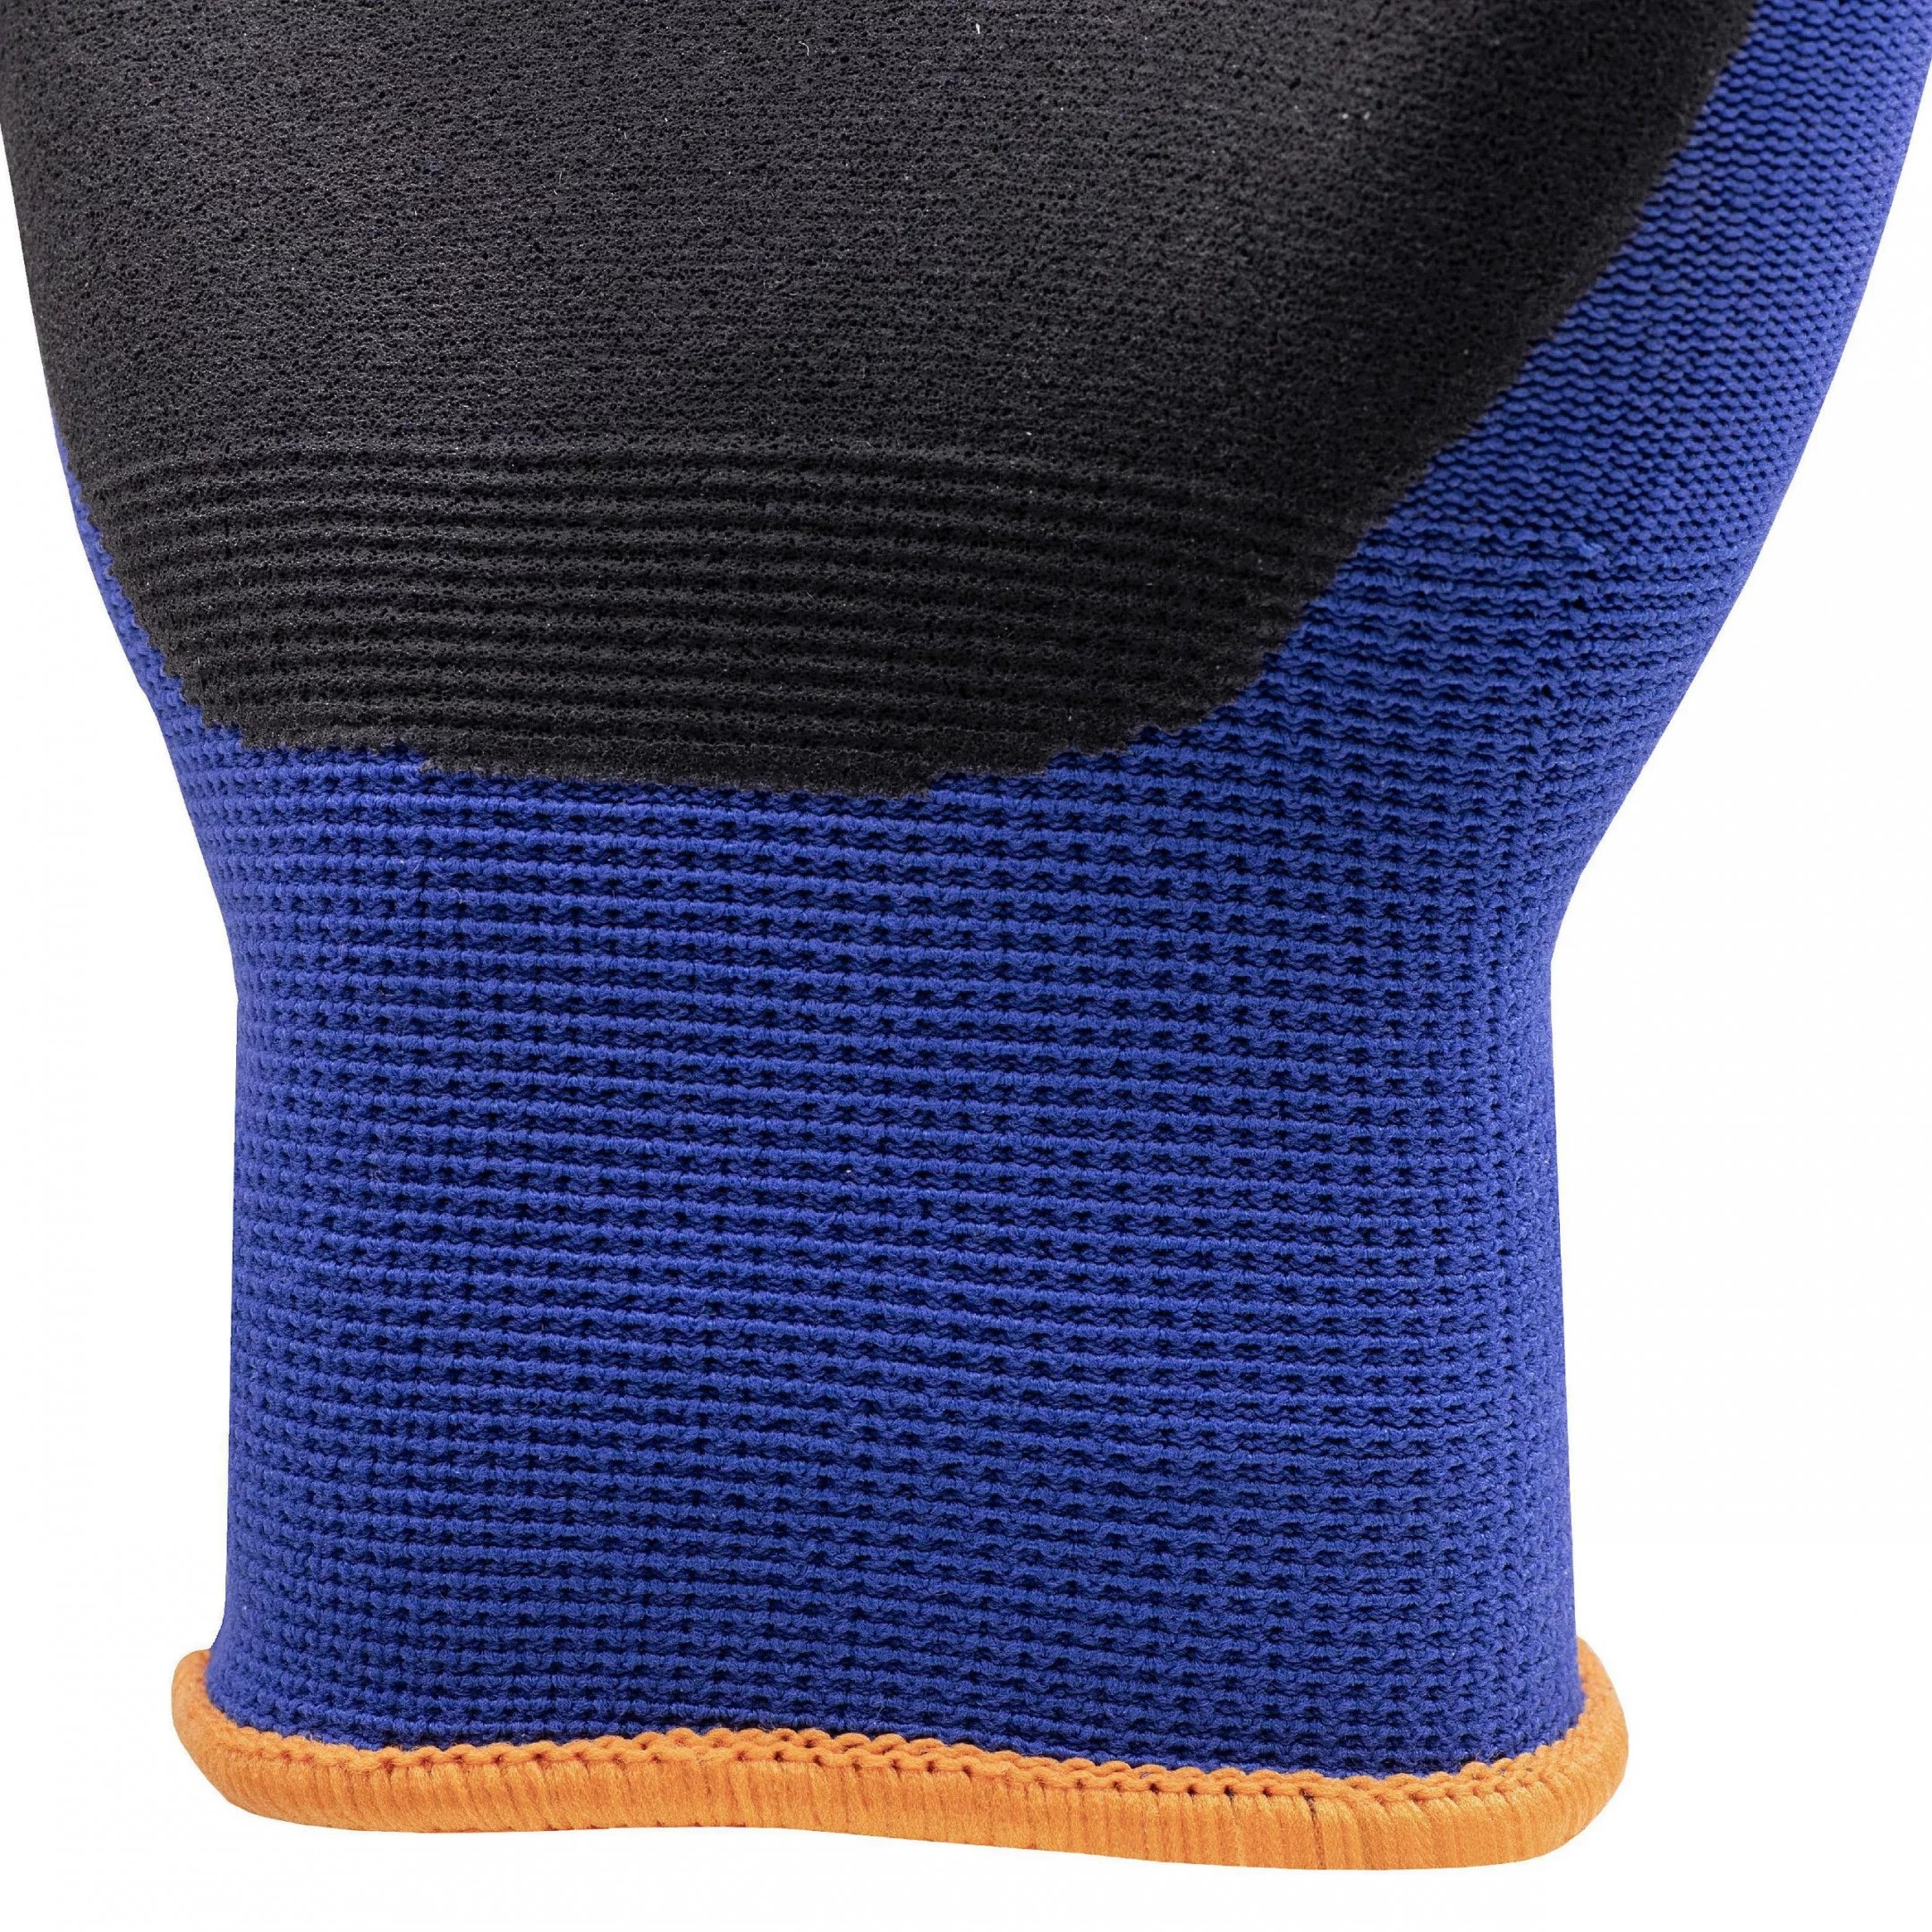 Uvex Athletic Lite Slim Fit Fitting Glove